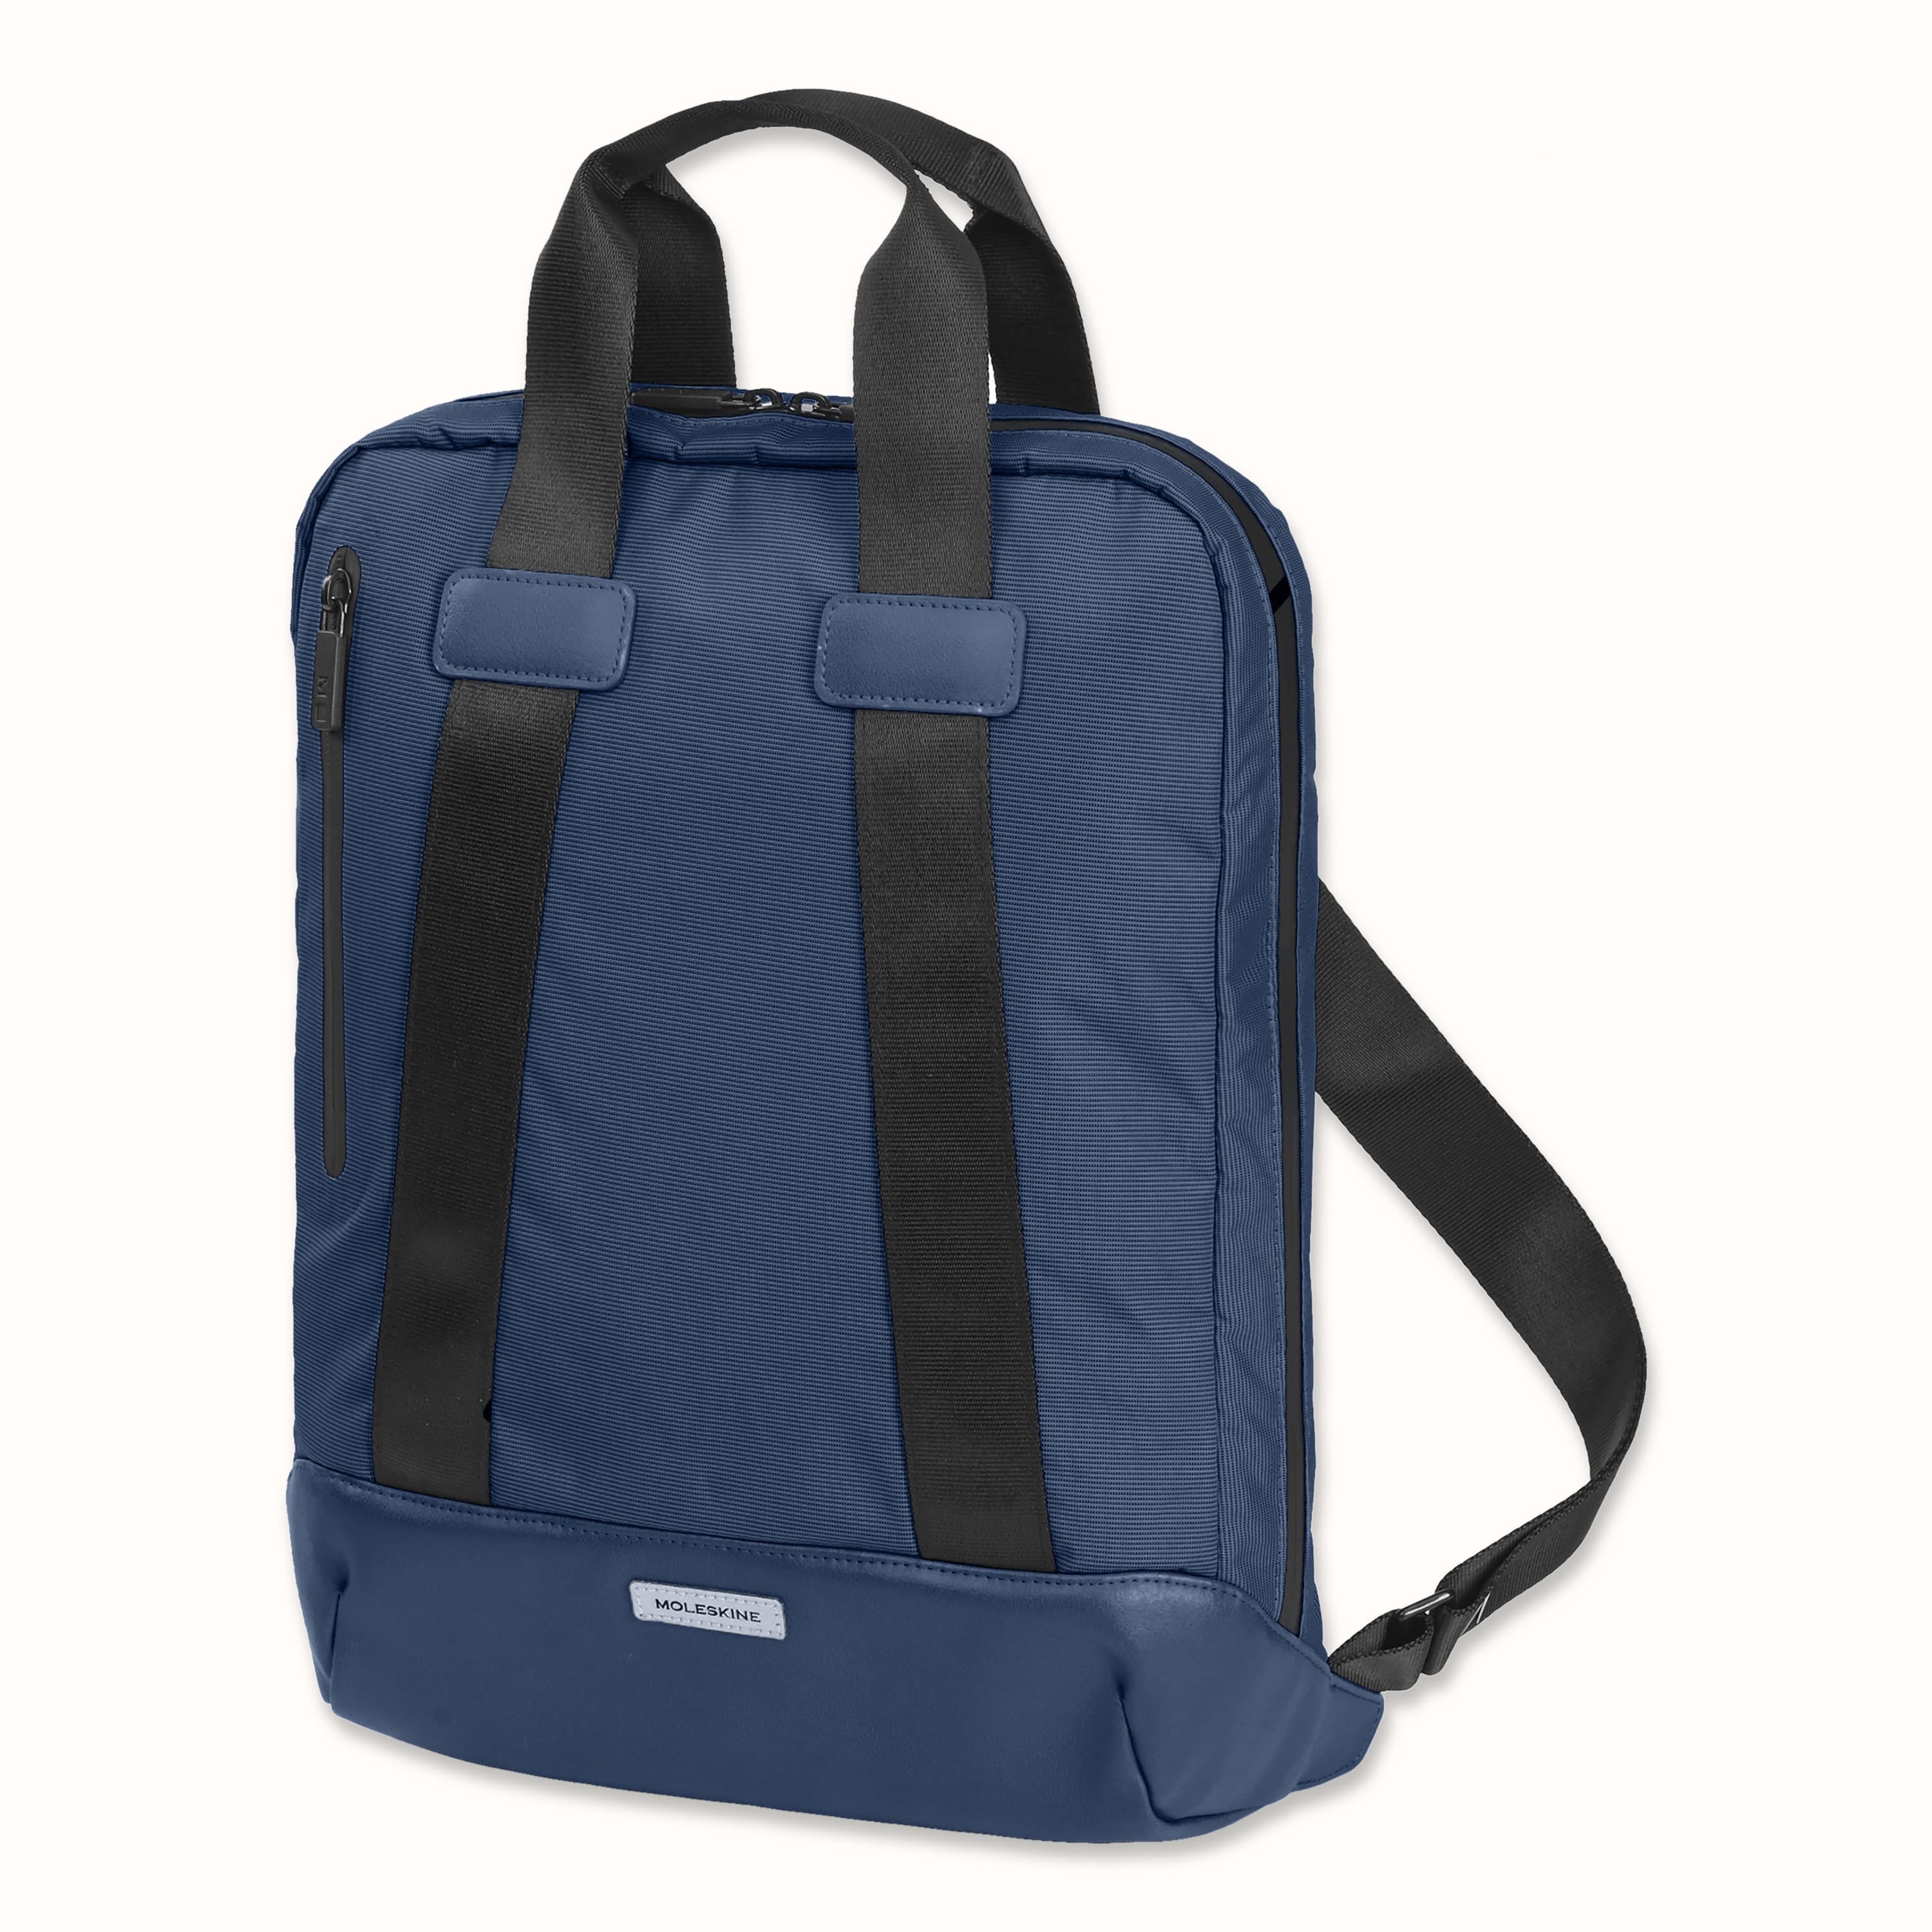 Moleskine ID Backpack Laptop Bag Slate Gray | eBay